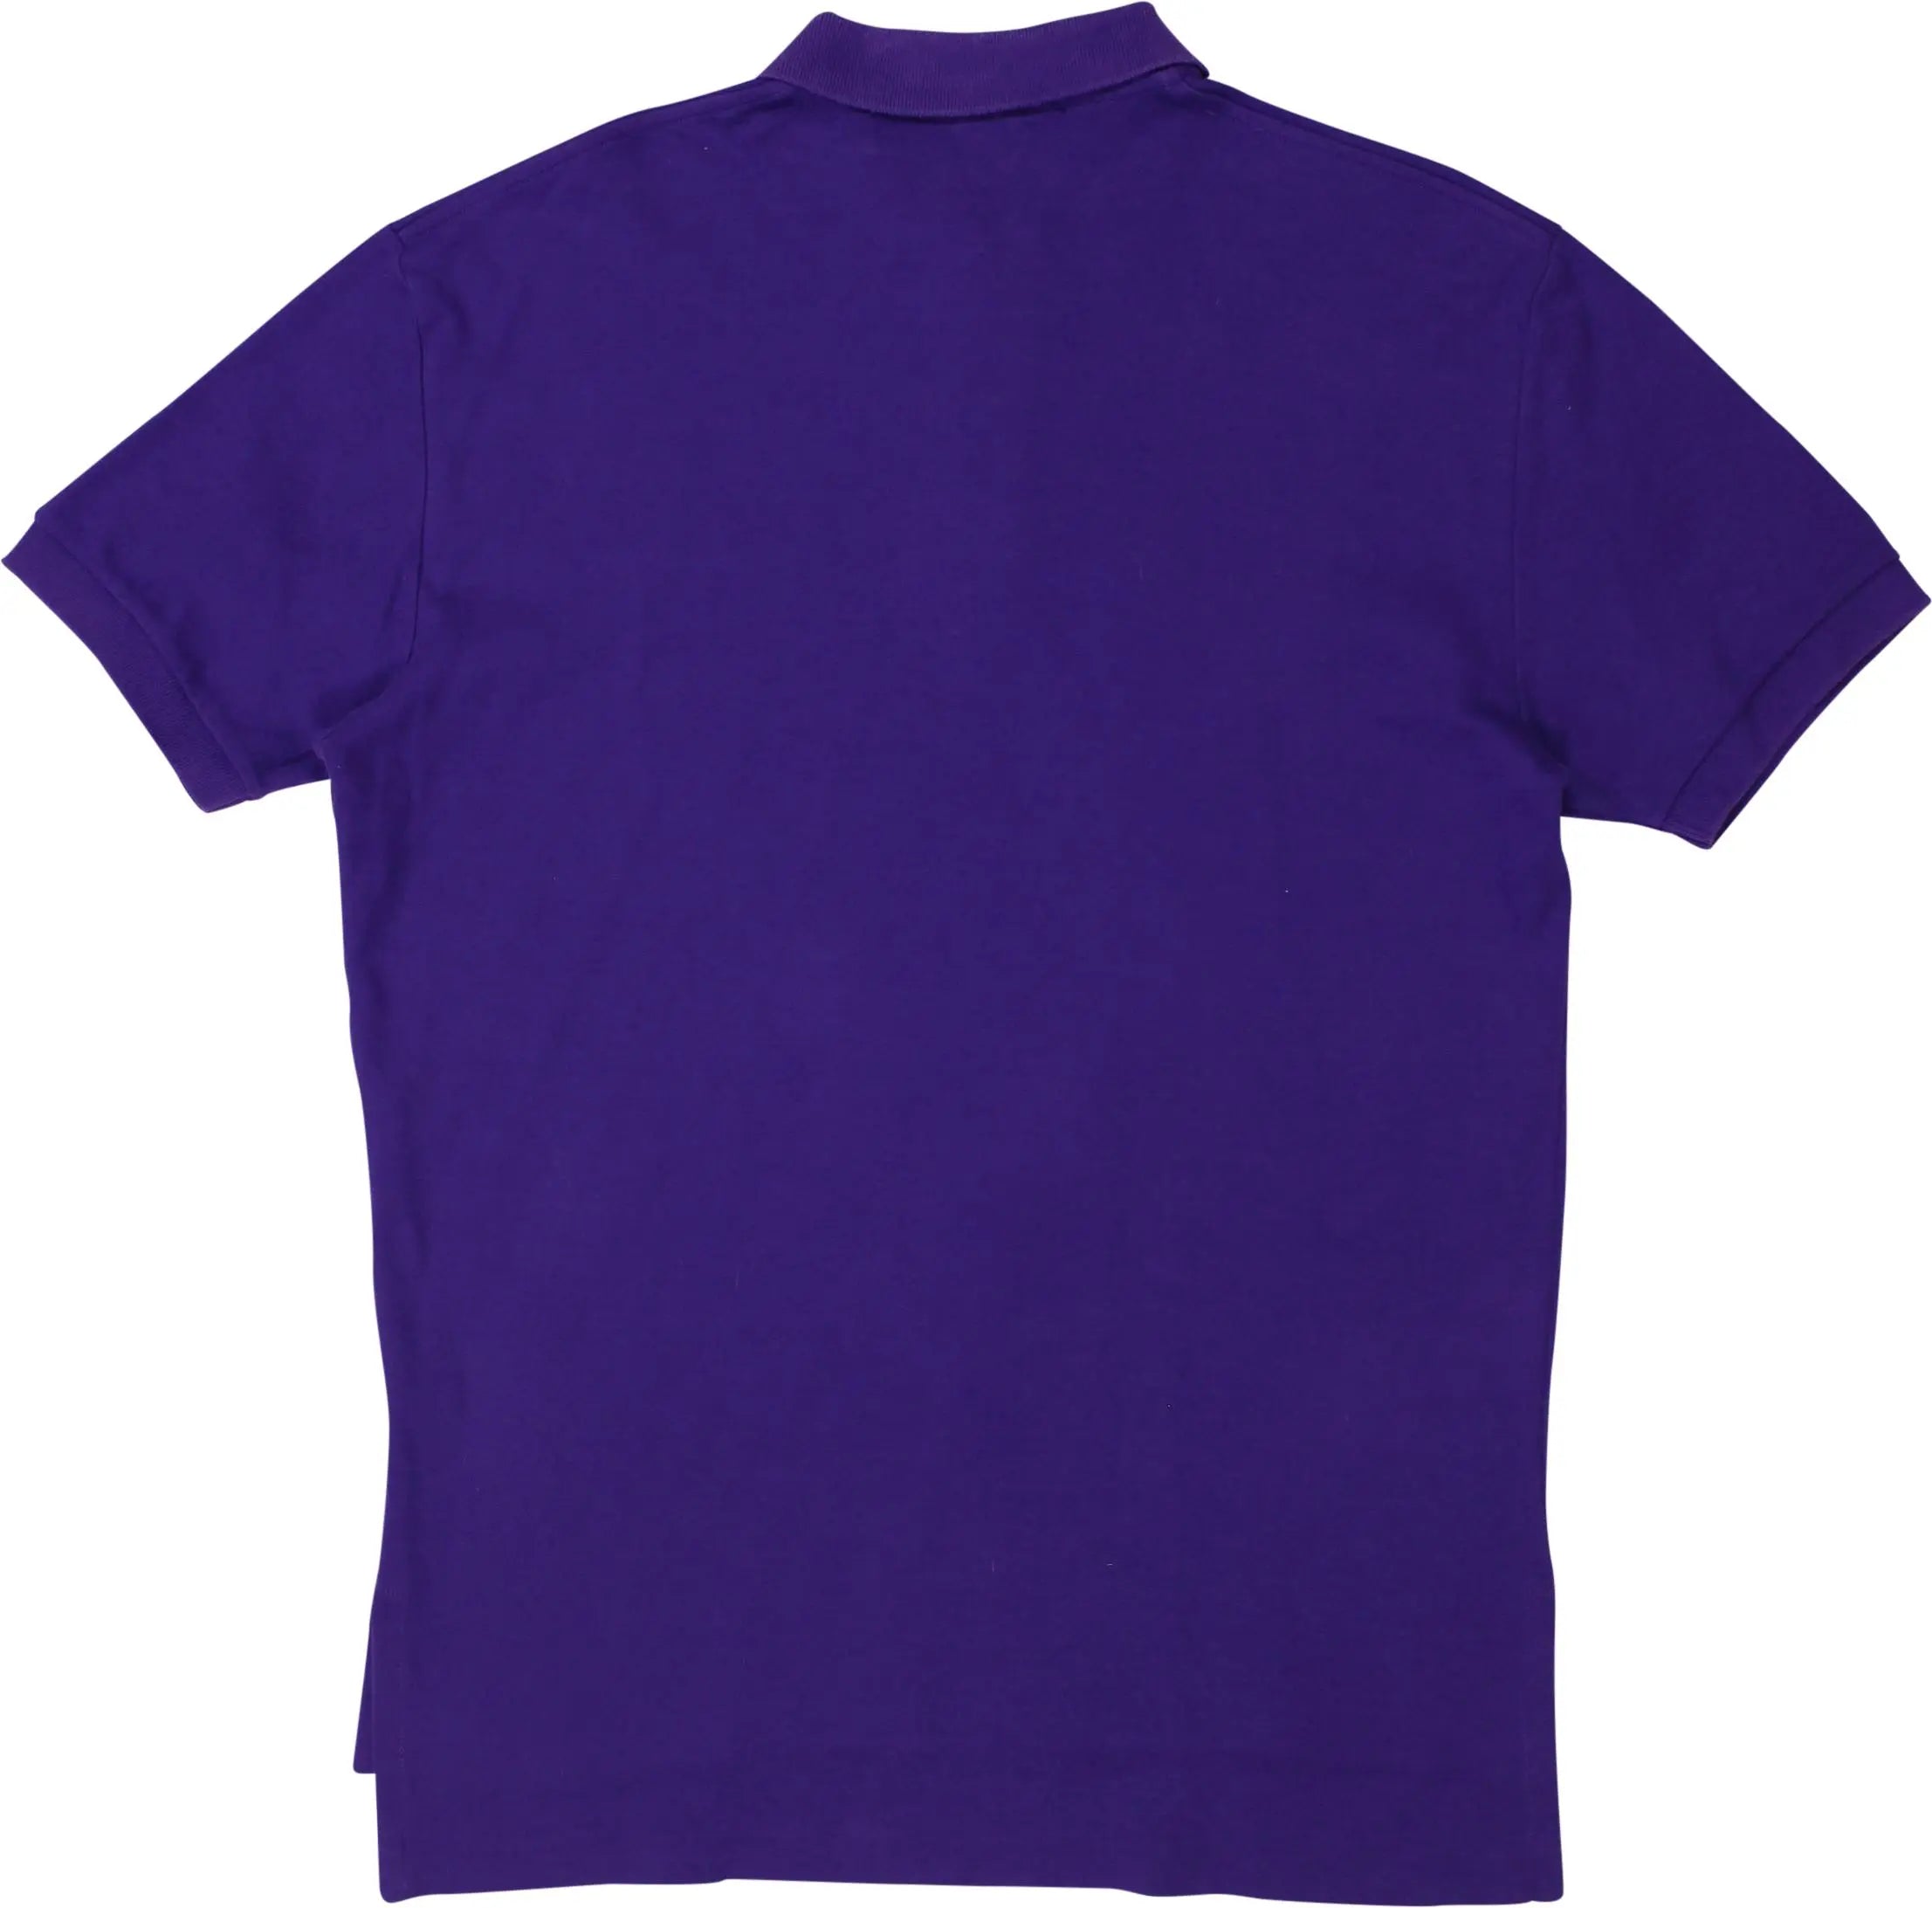 Ralph Lauren - Purple Short Sleeve Polo by Ralph Lauren- ThriftTale.com - Vintage and second handclothing